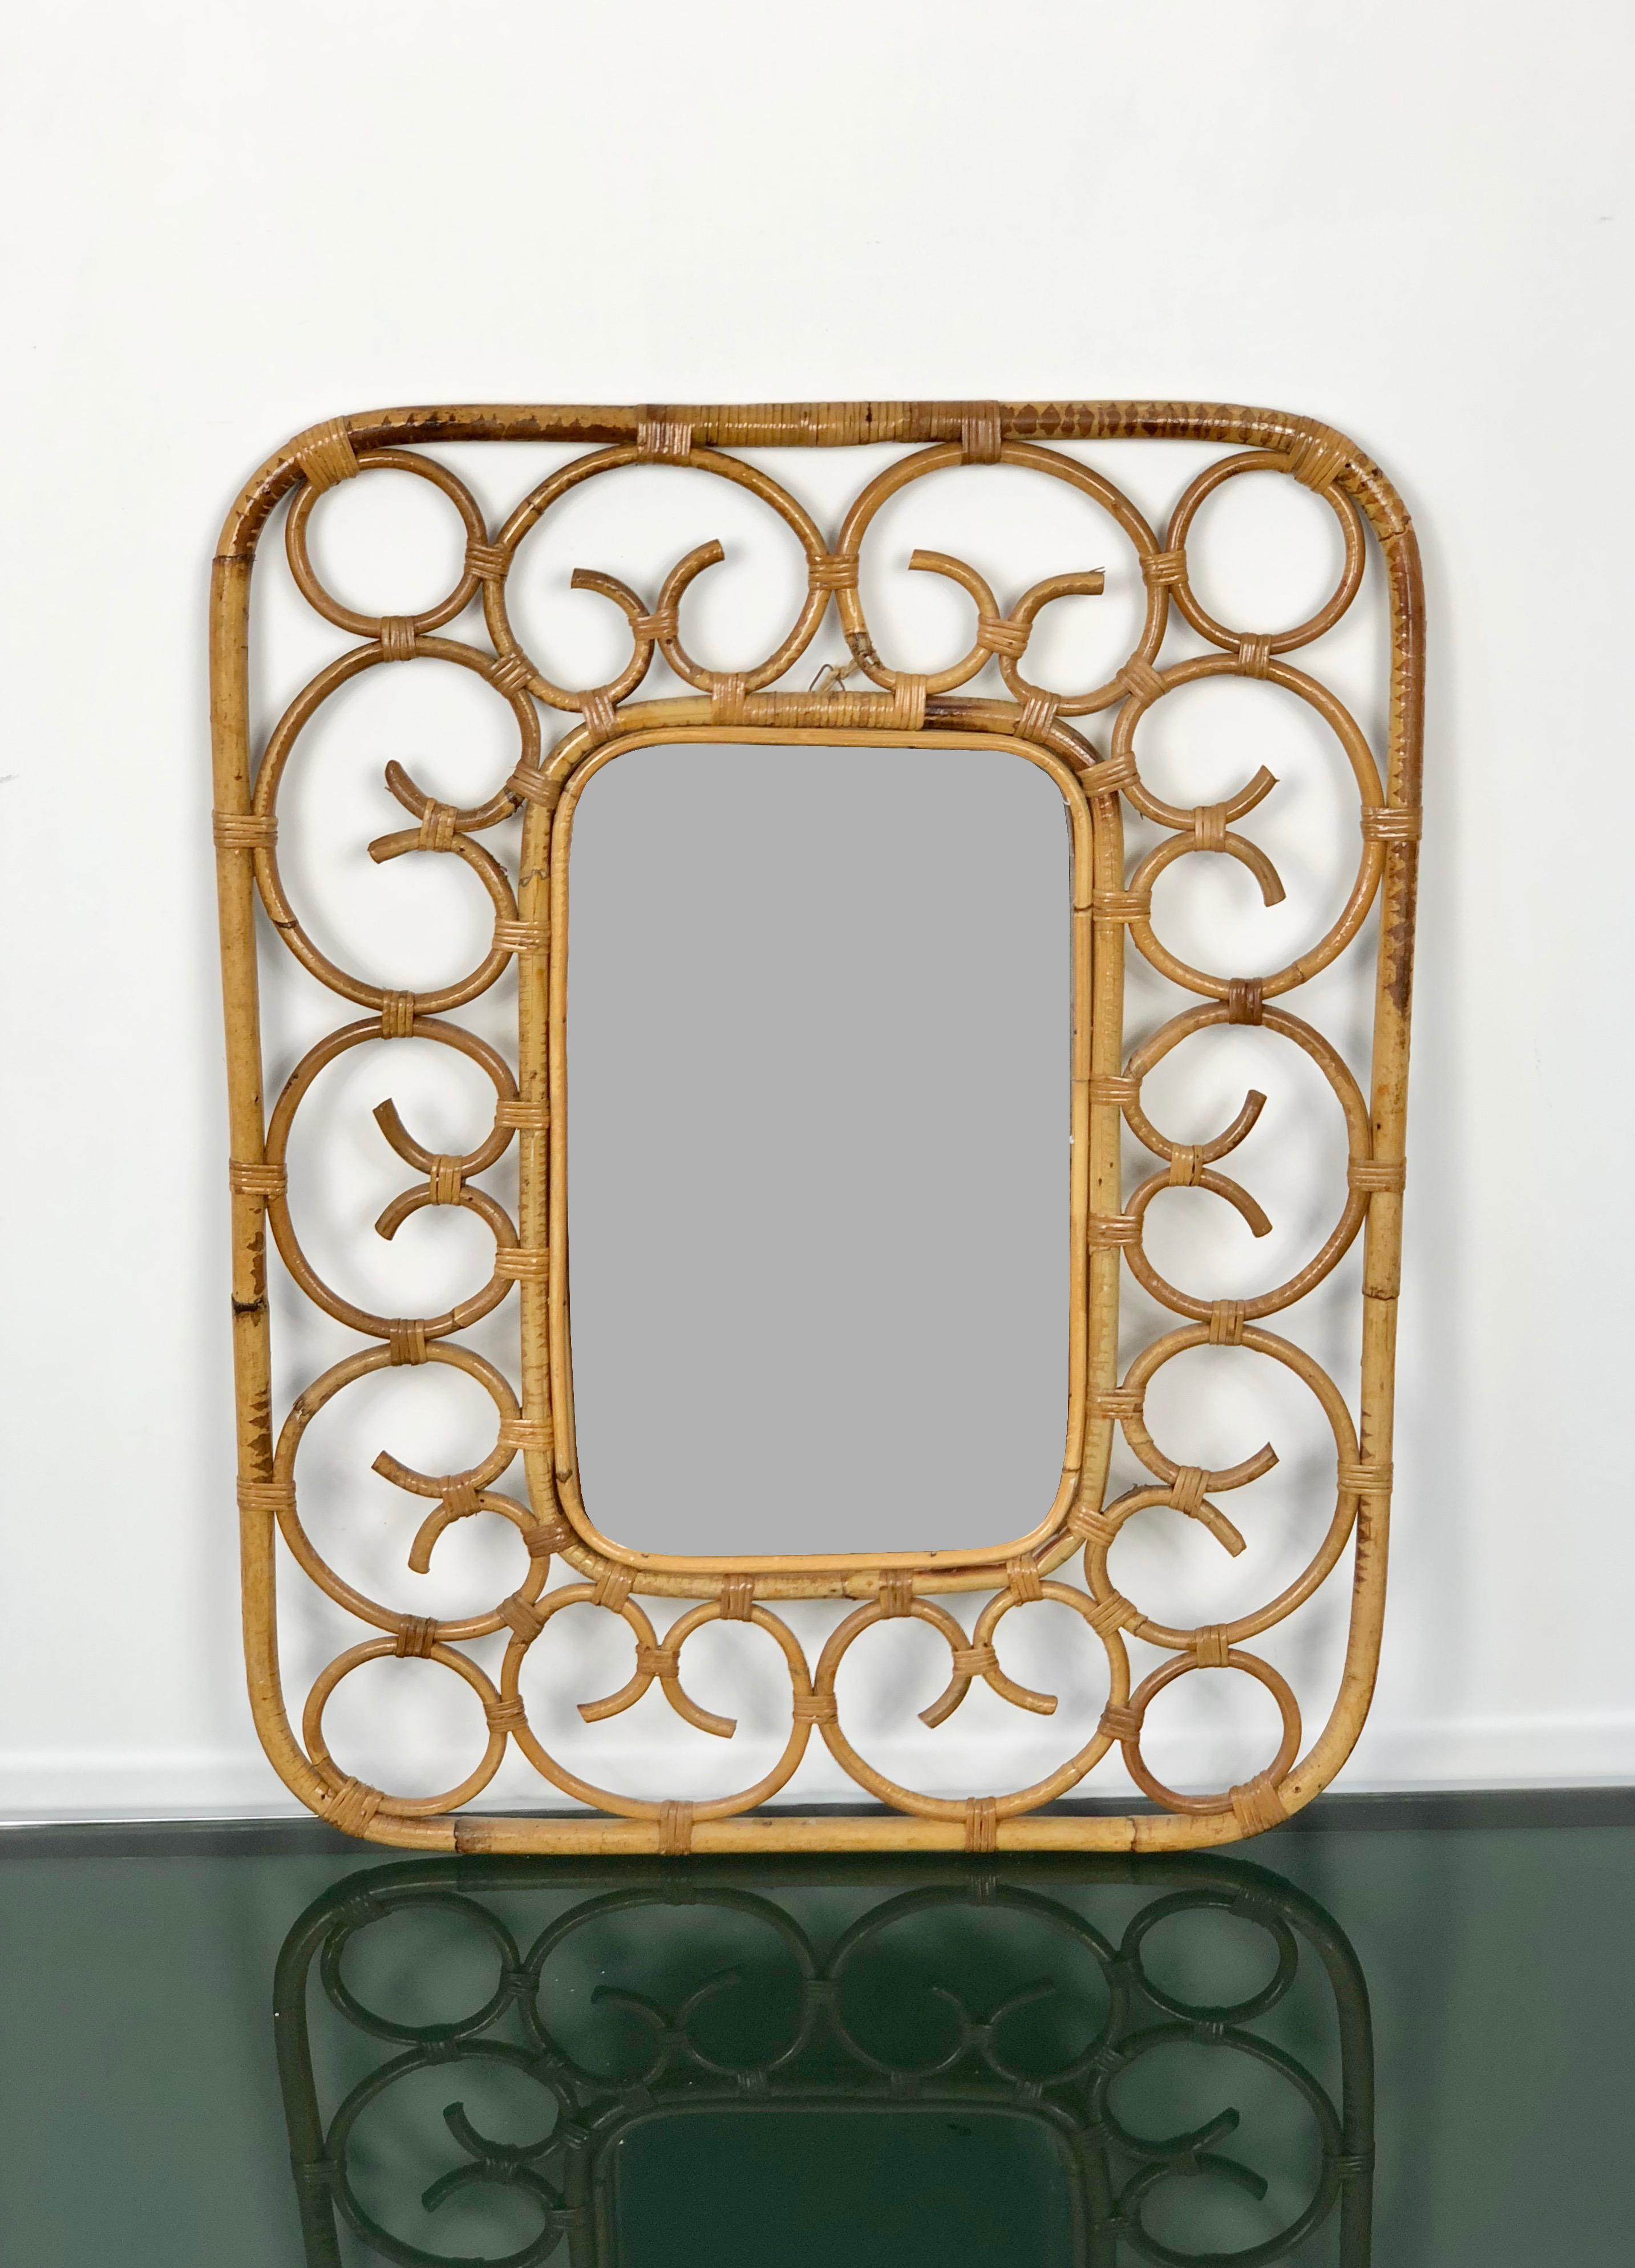 Wall mirror framed in rattan twirls in the style of the Italian designer Franco Albini, Italy, circa 1960.